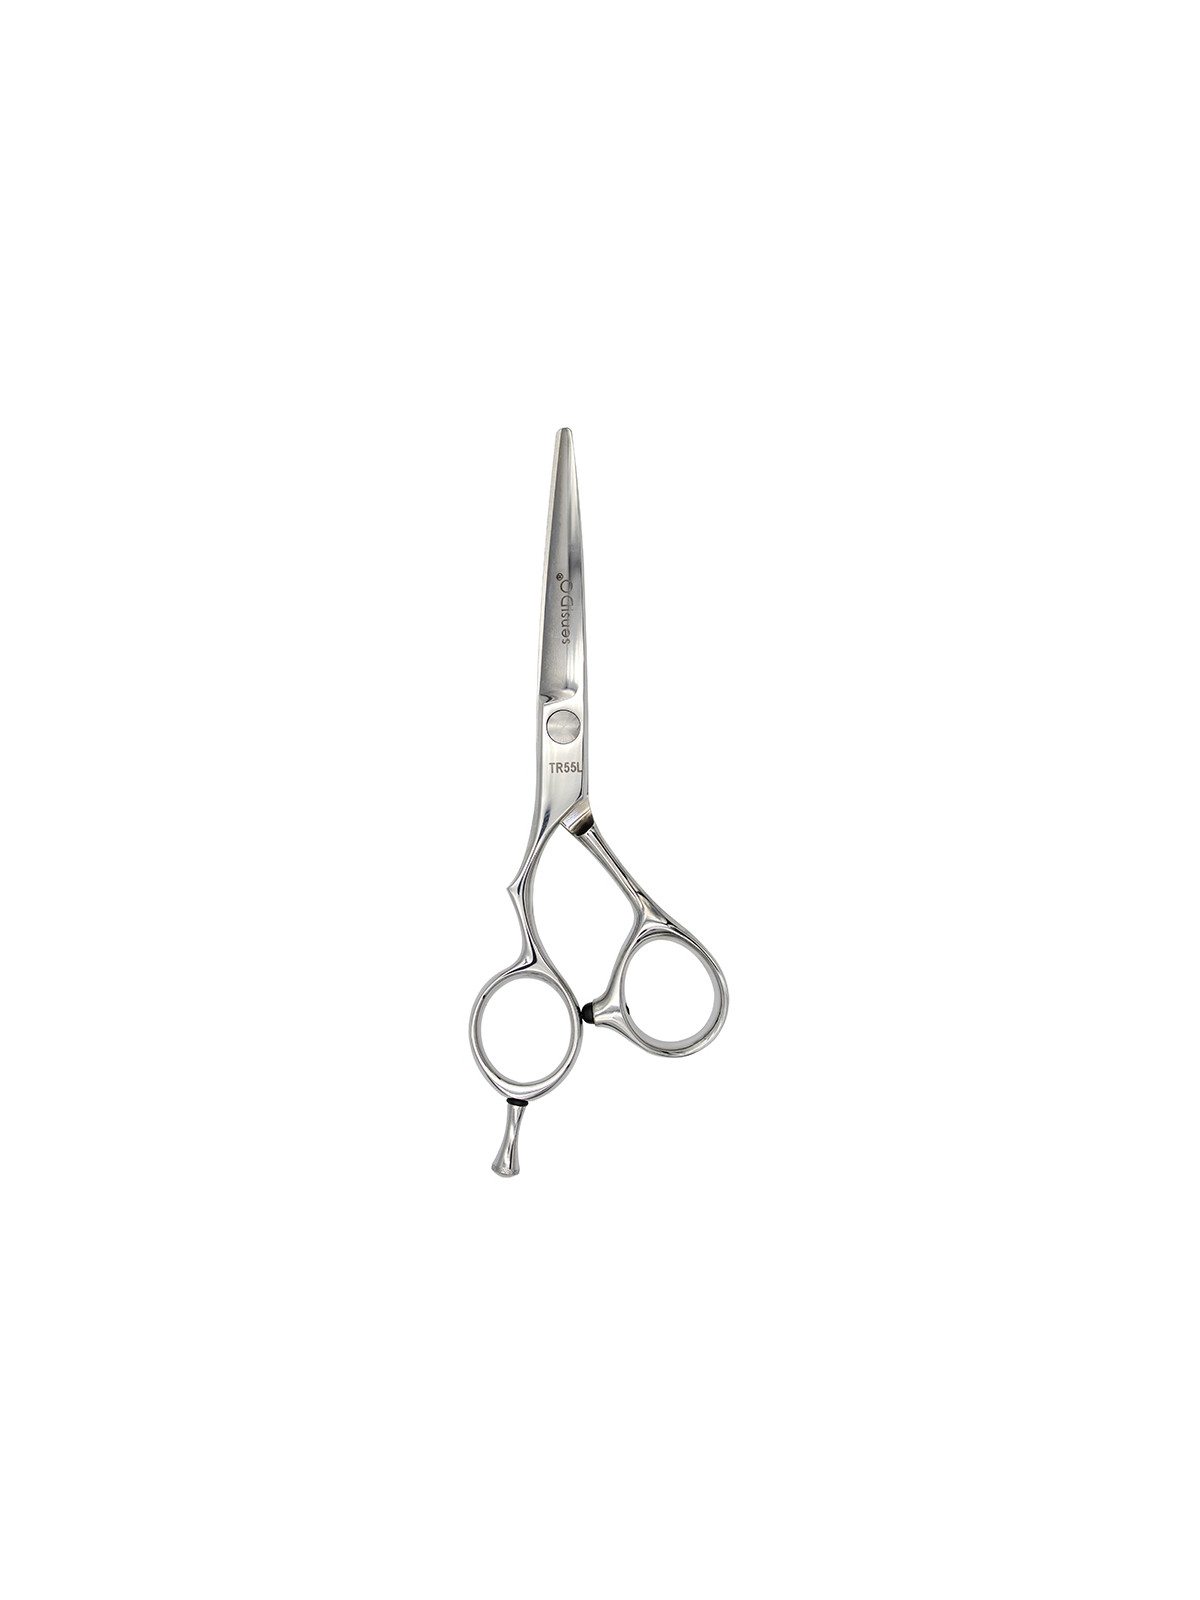 SensiDO TR left hand cutting scissors